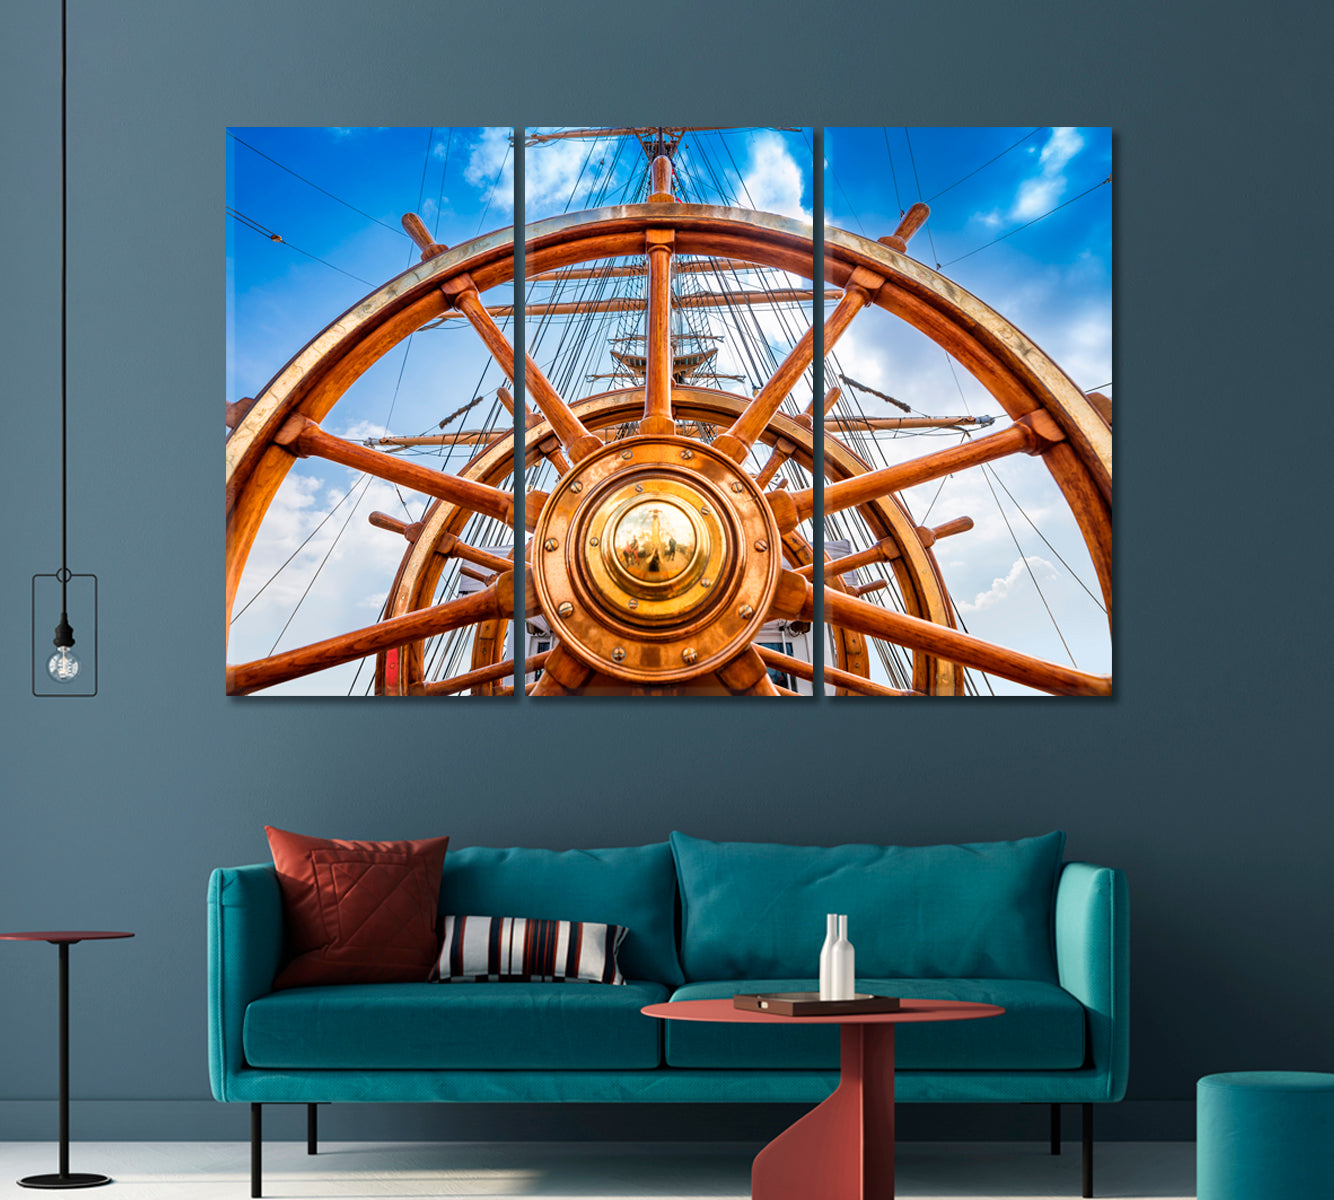 Ship's Wheel Canvas Print-Canvas Print-CetArt-1 Panel-24x16 inches-CetArt